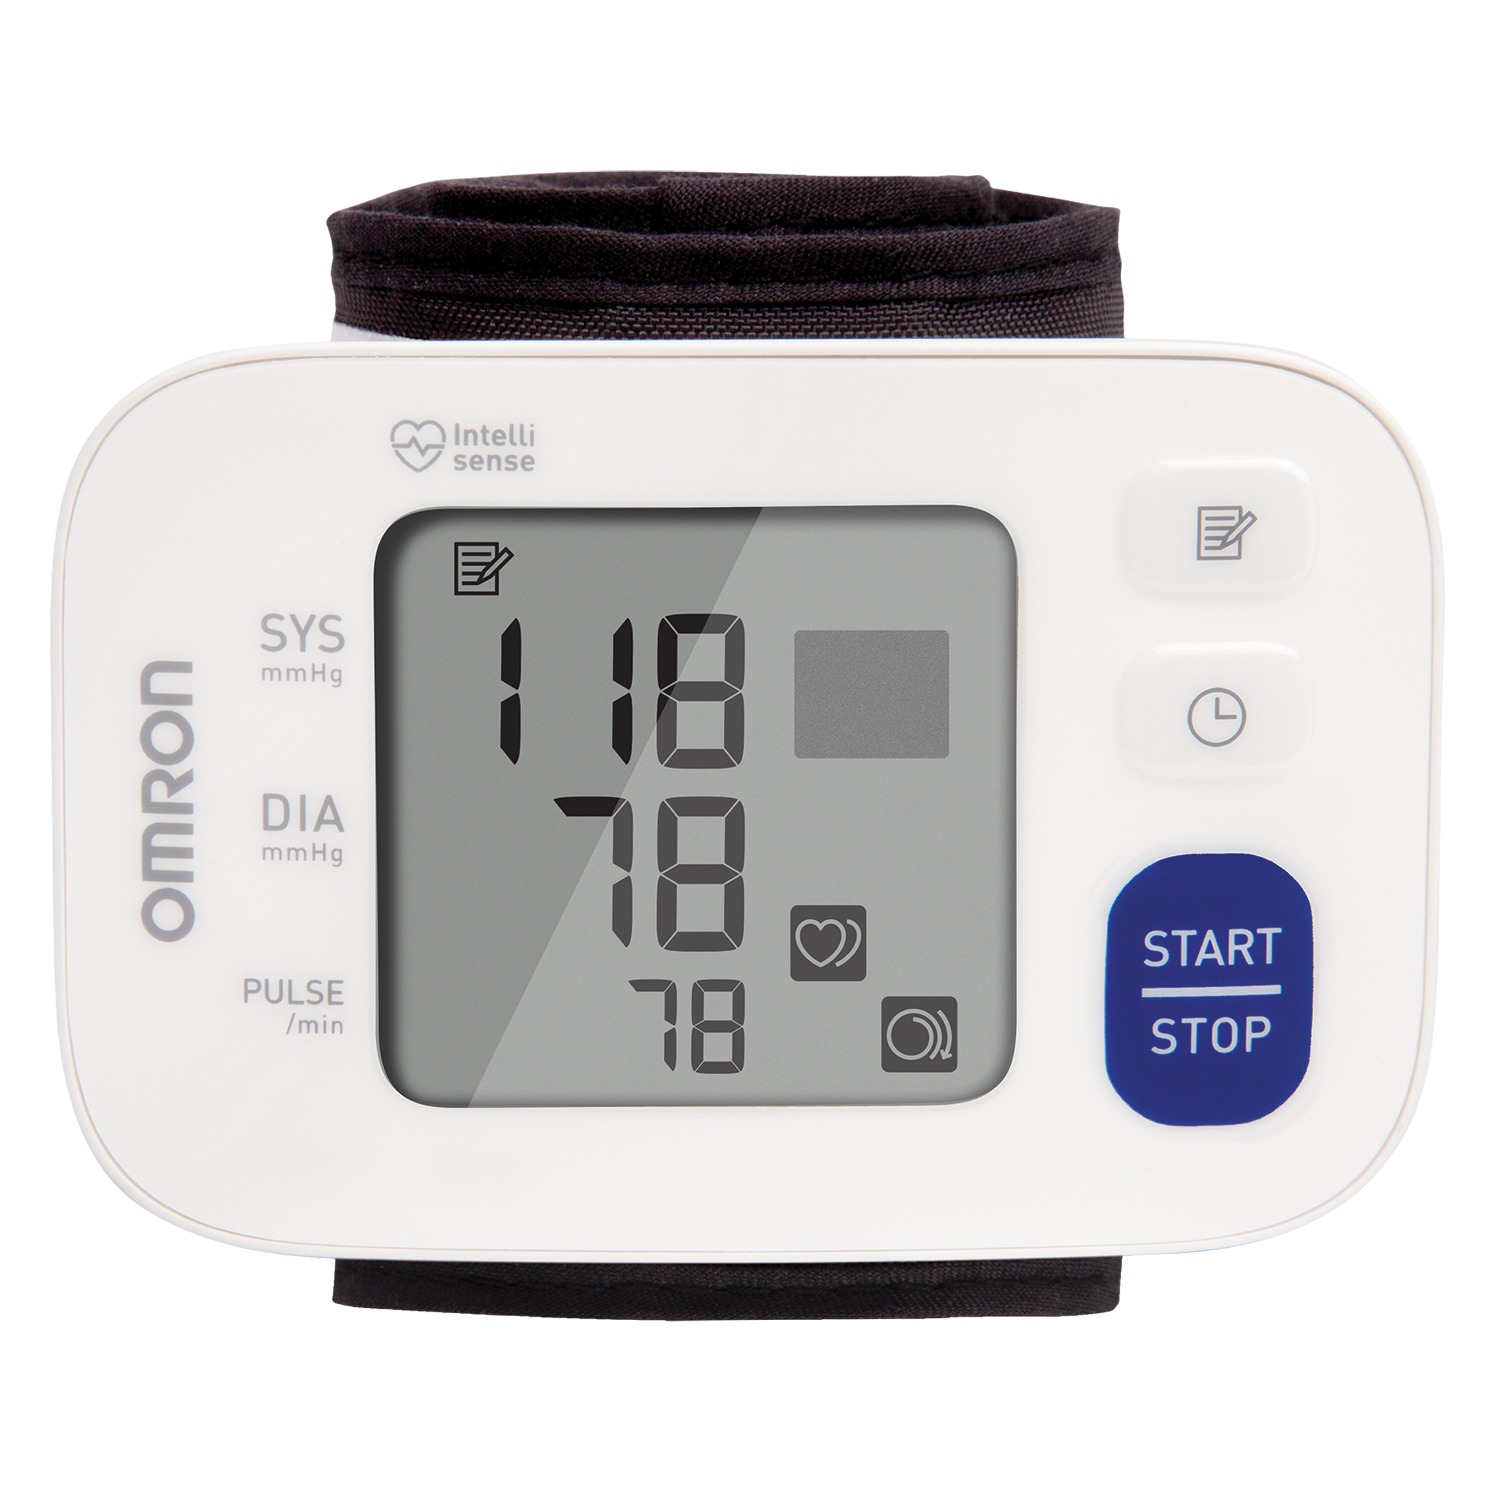 Relion Wrist Blood Pressure Monitor Symbols - Captions Energy